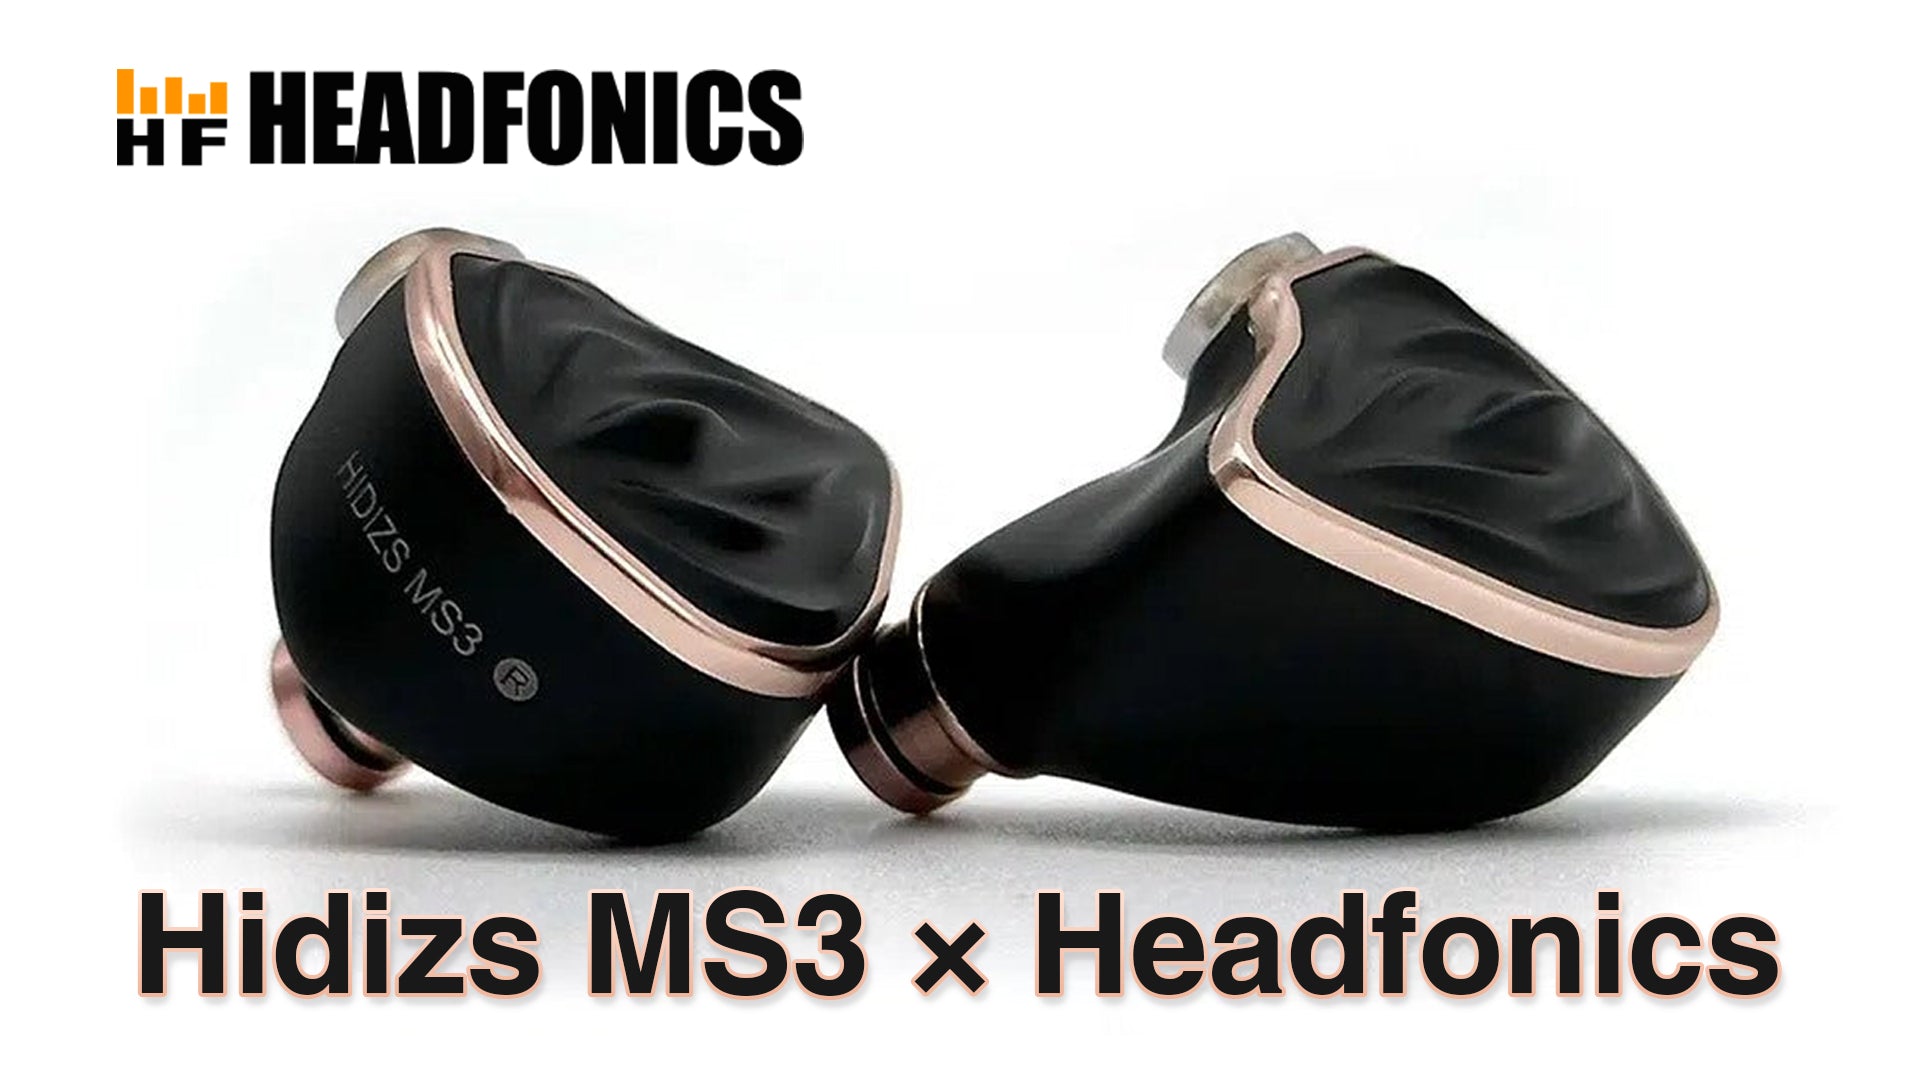 Hidizs MS3 Review - Headfonics